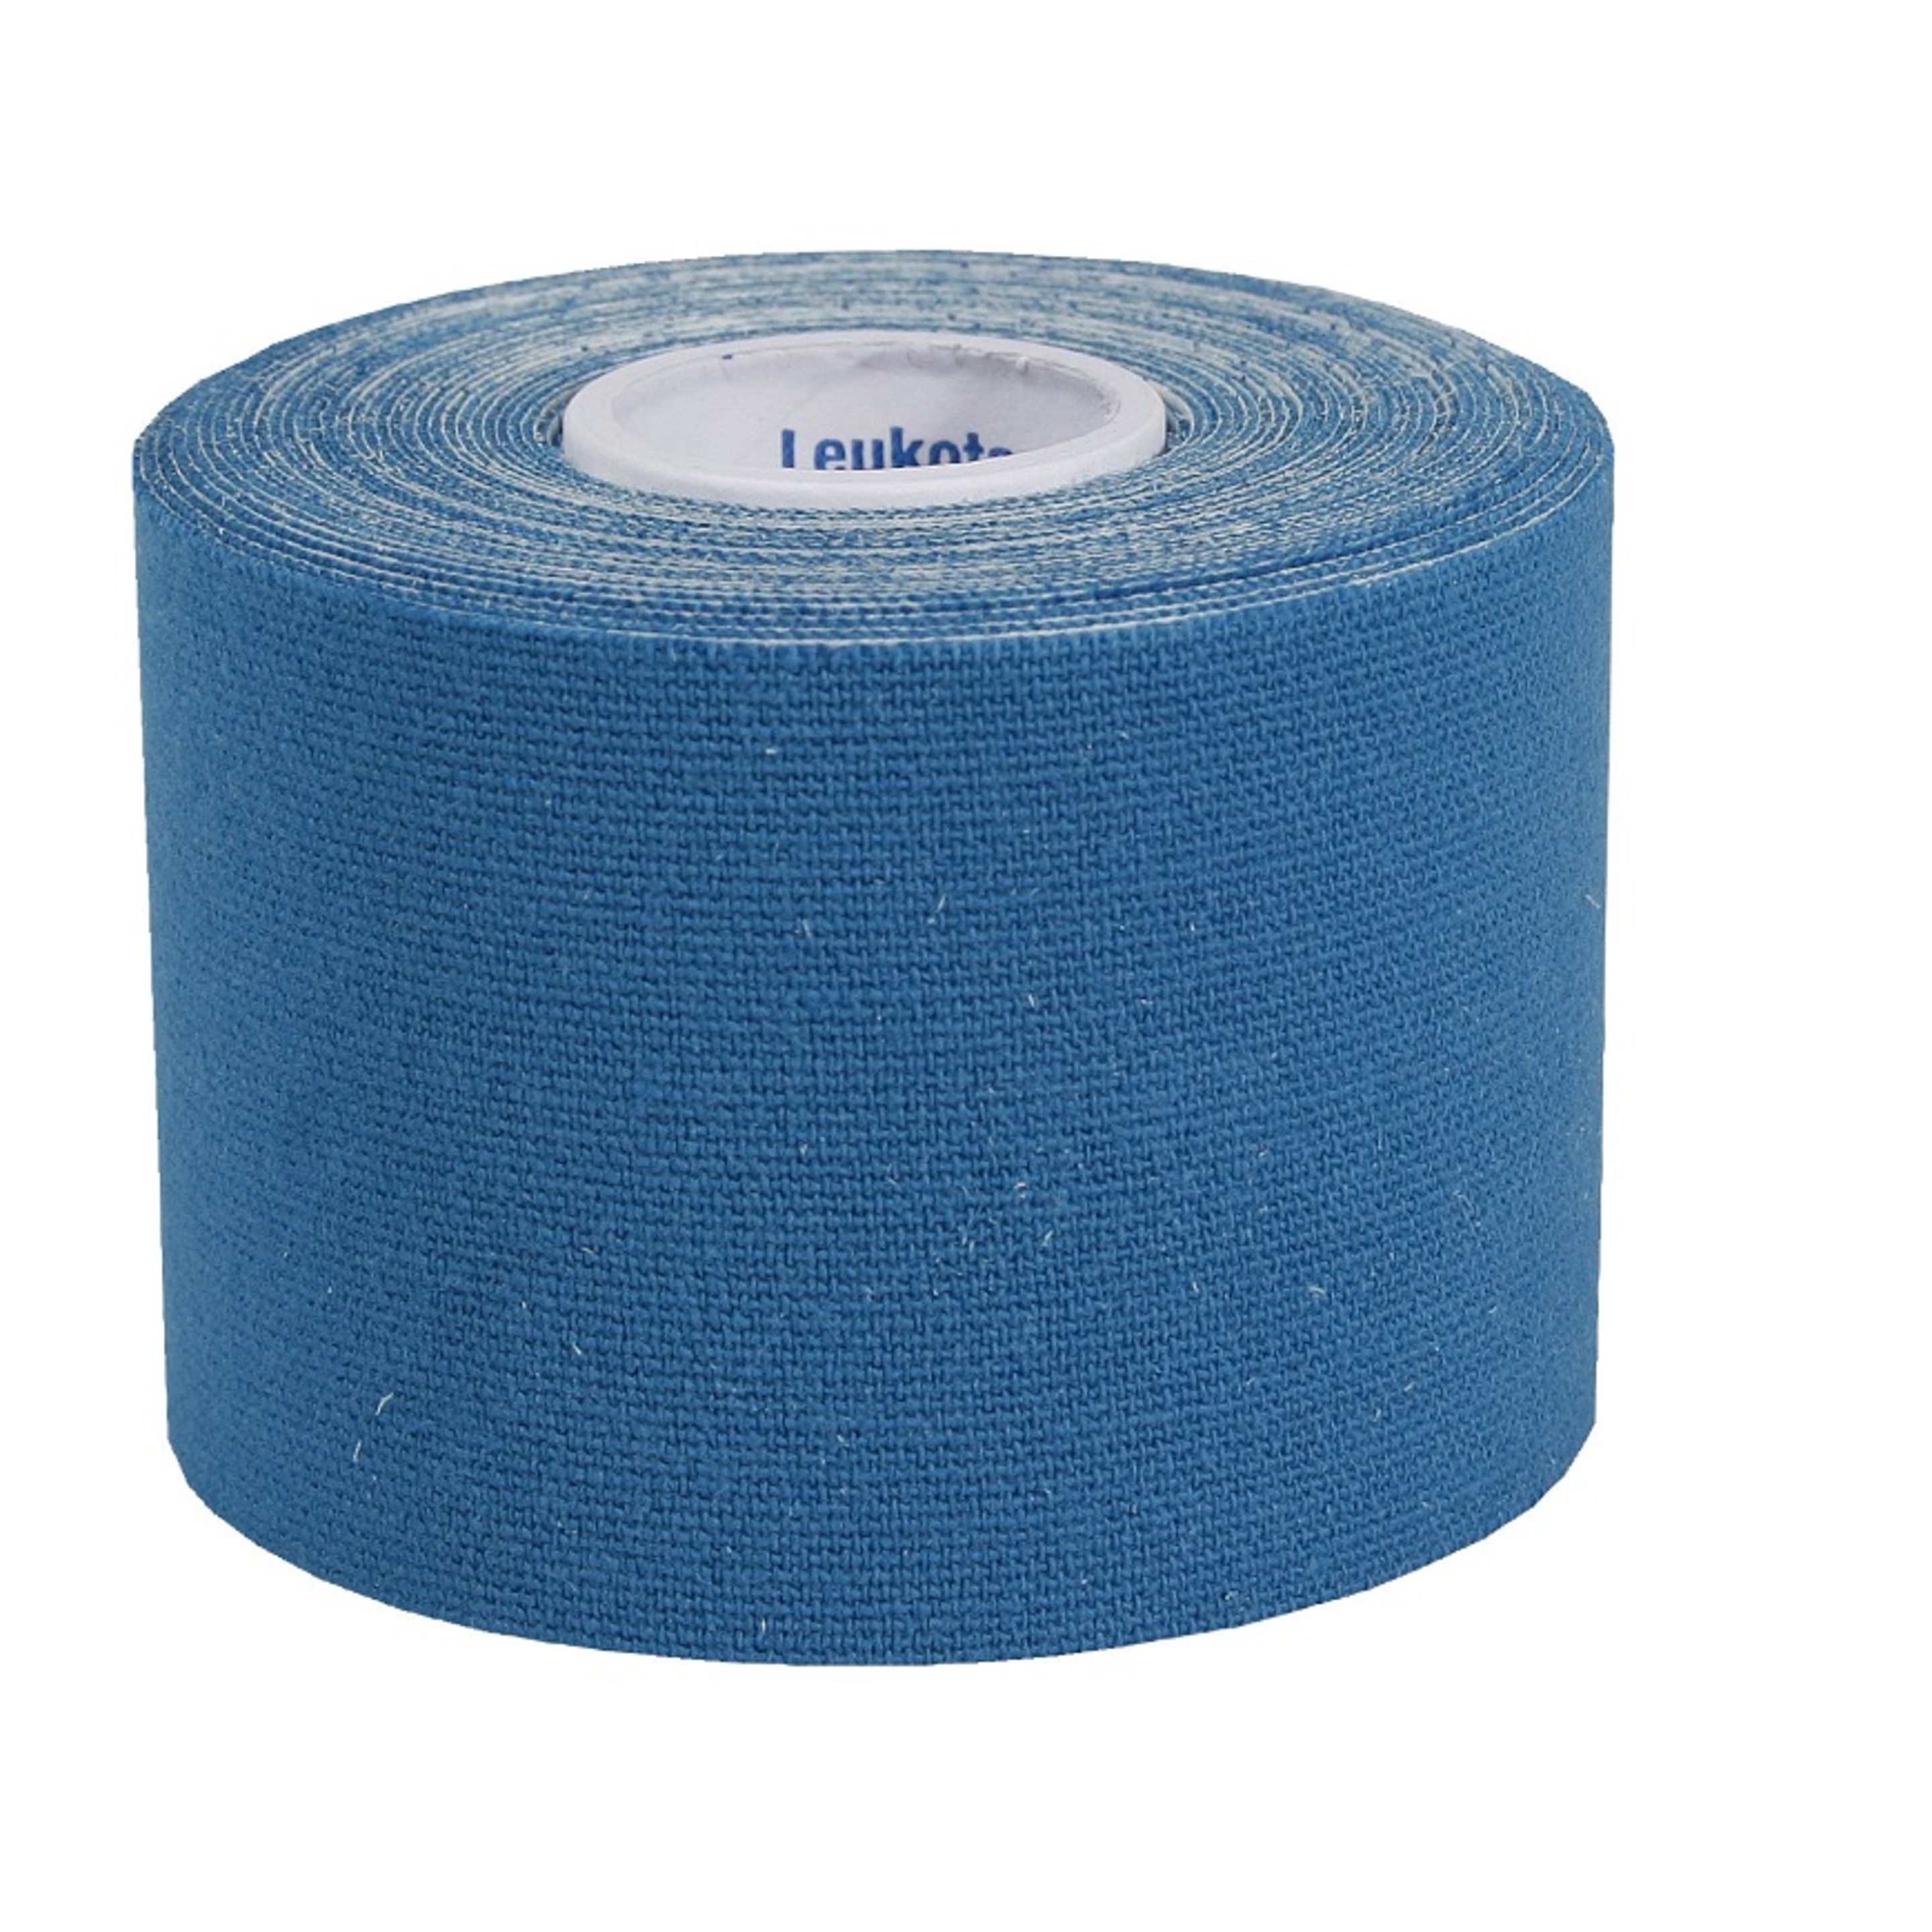 Leuko Tape-k (Ligadura Elastica Adesiva) - azul - 